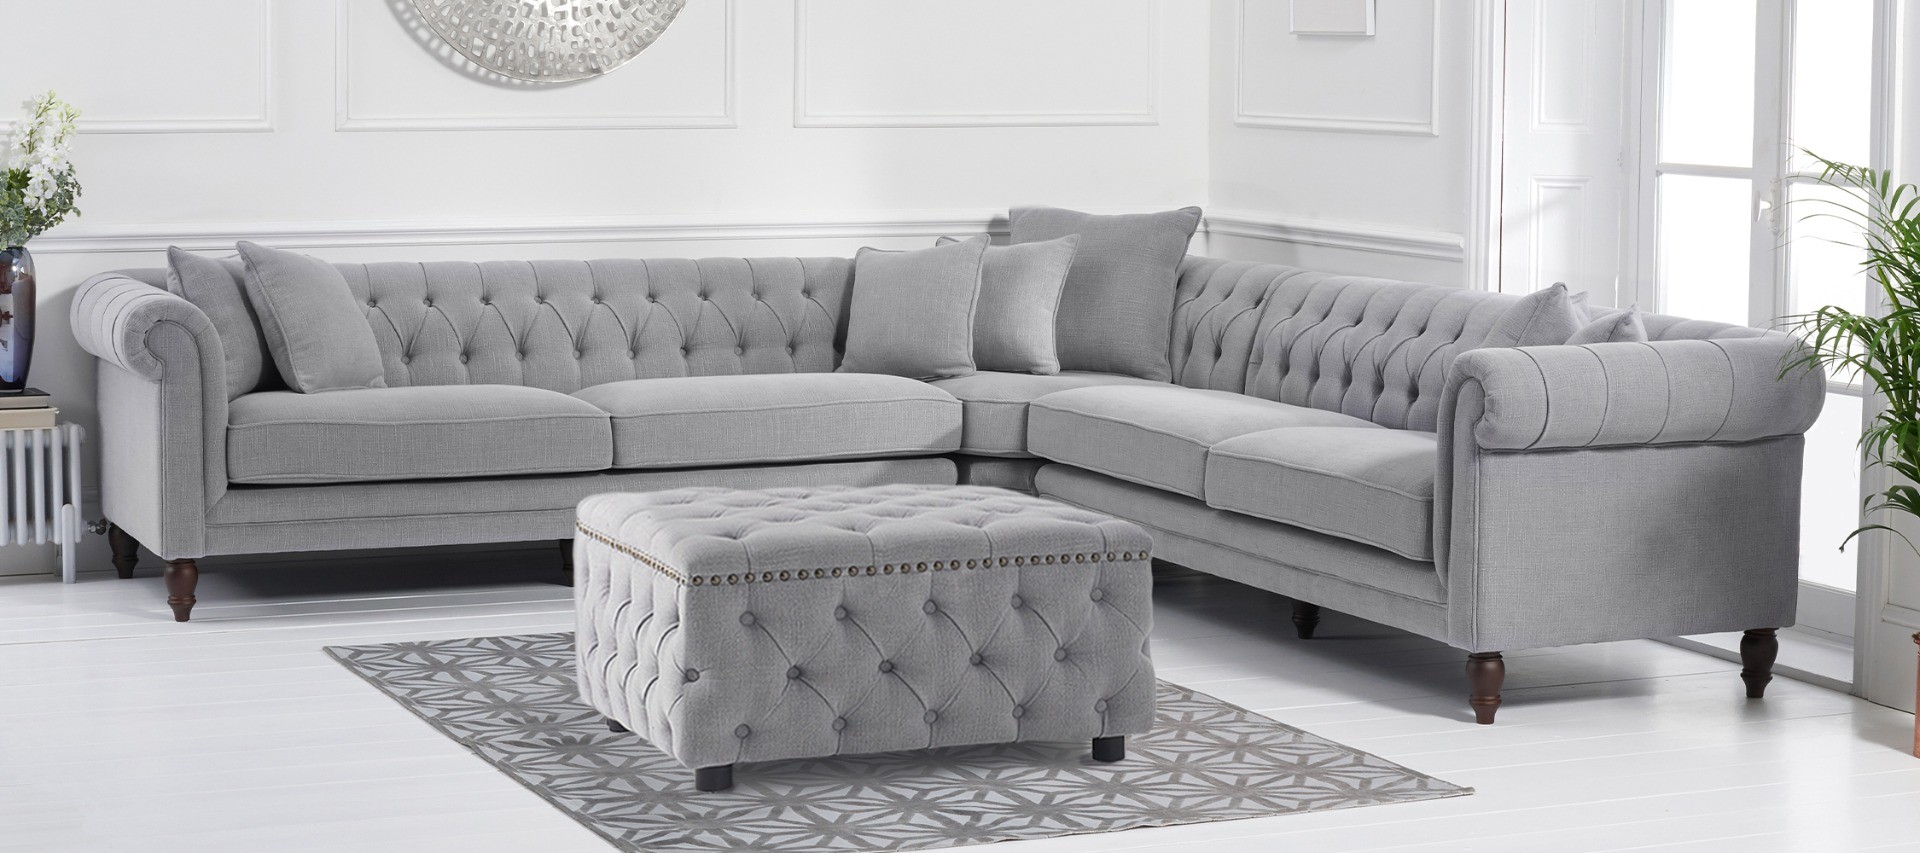 Photo 3 of Bromley large grey linen corner sofa